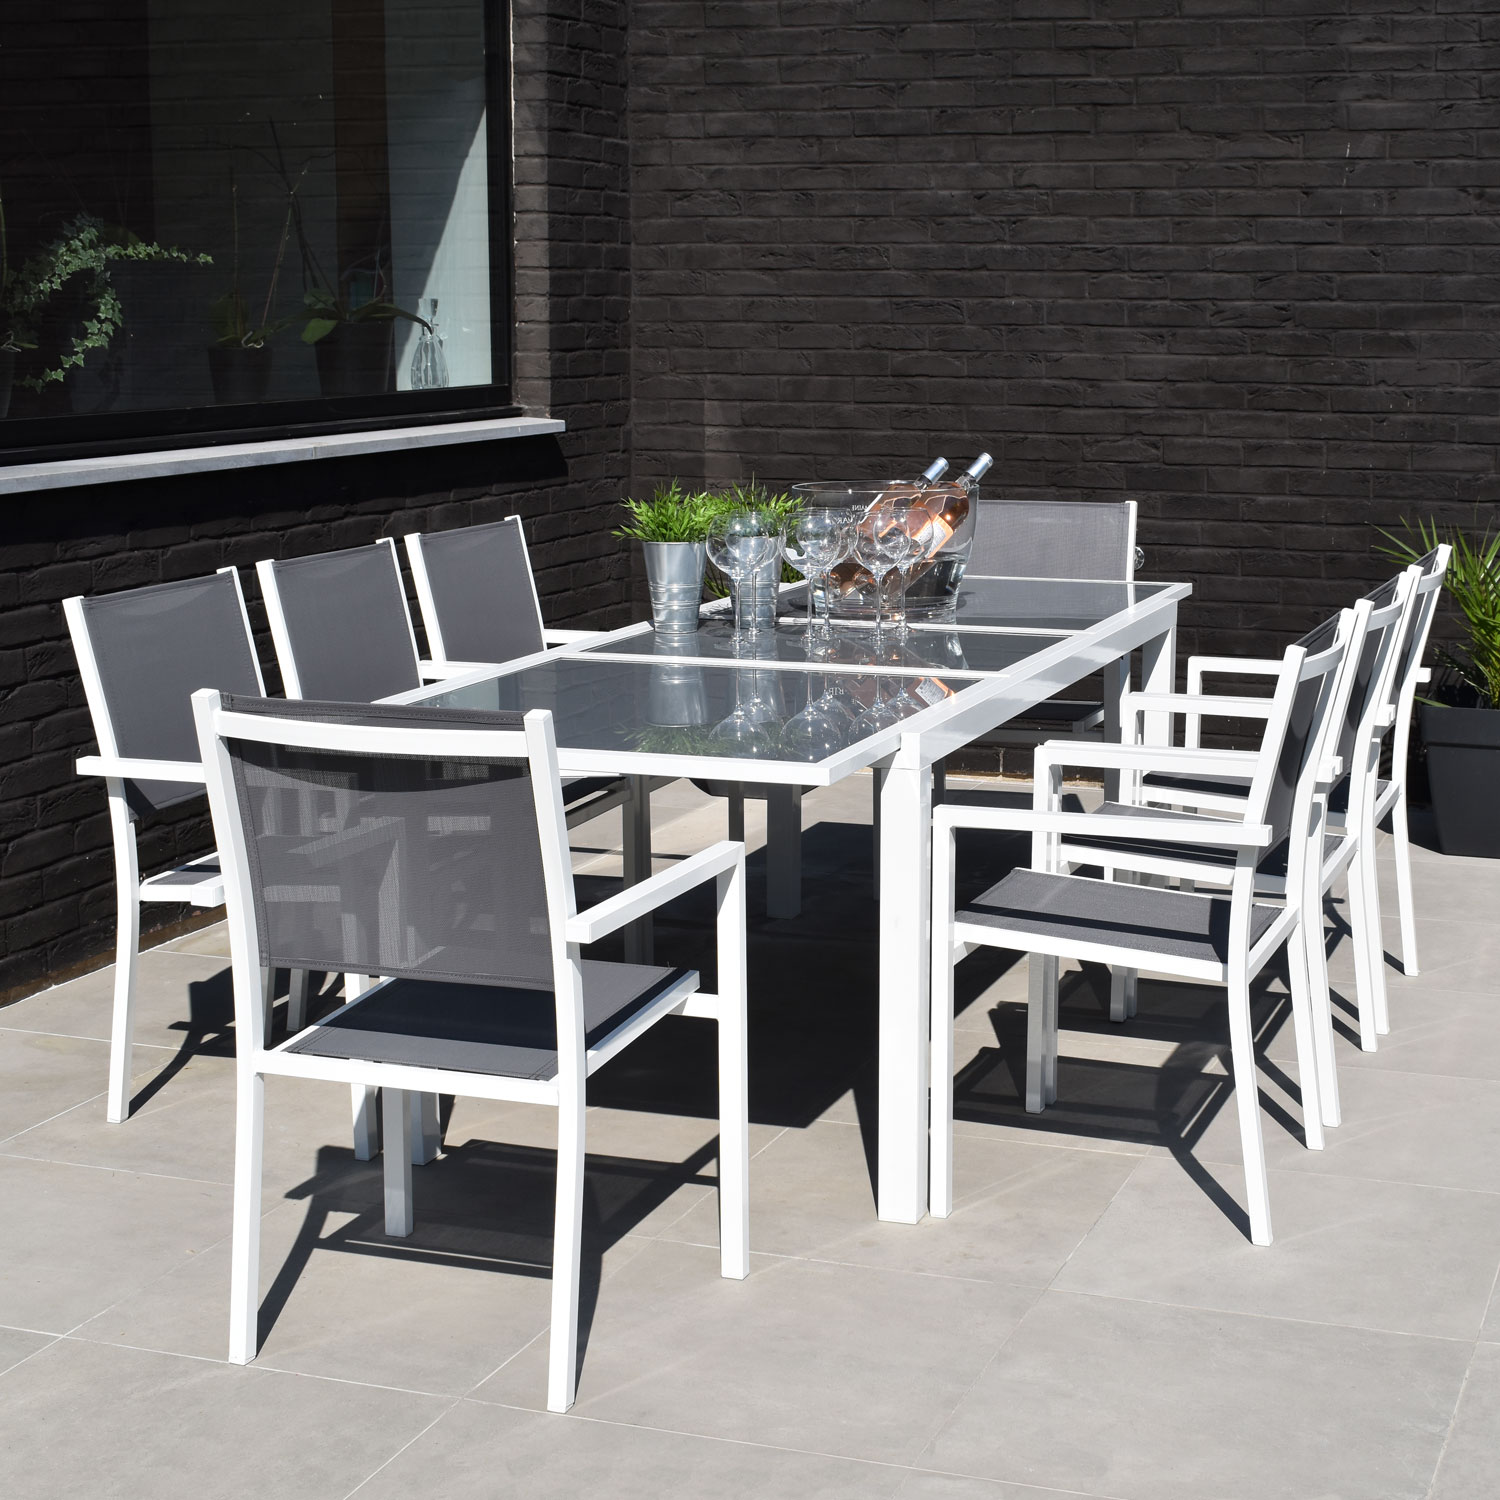 FIRENZE grijs textilene uittrekbare tuinset 8 zitplaatsen - wit aluminium